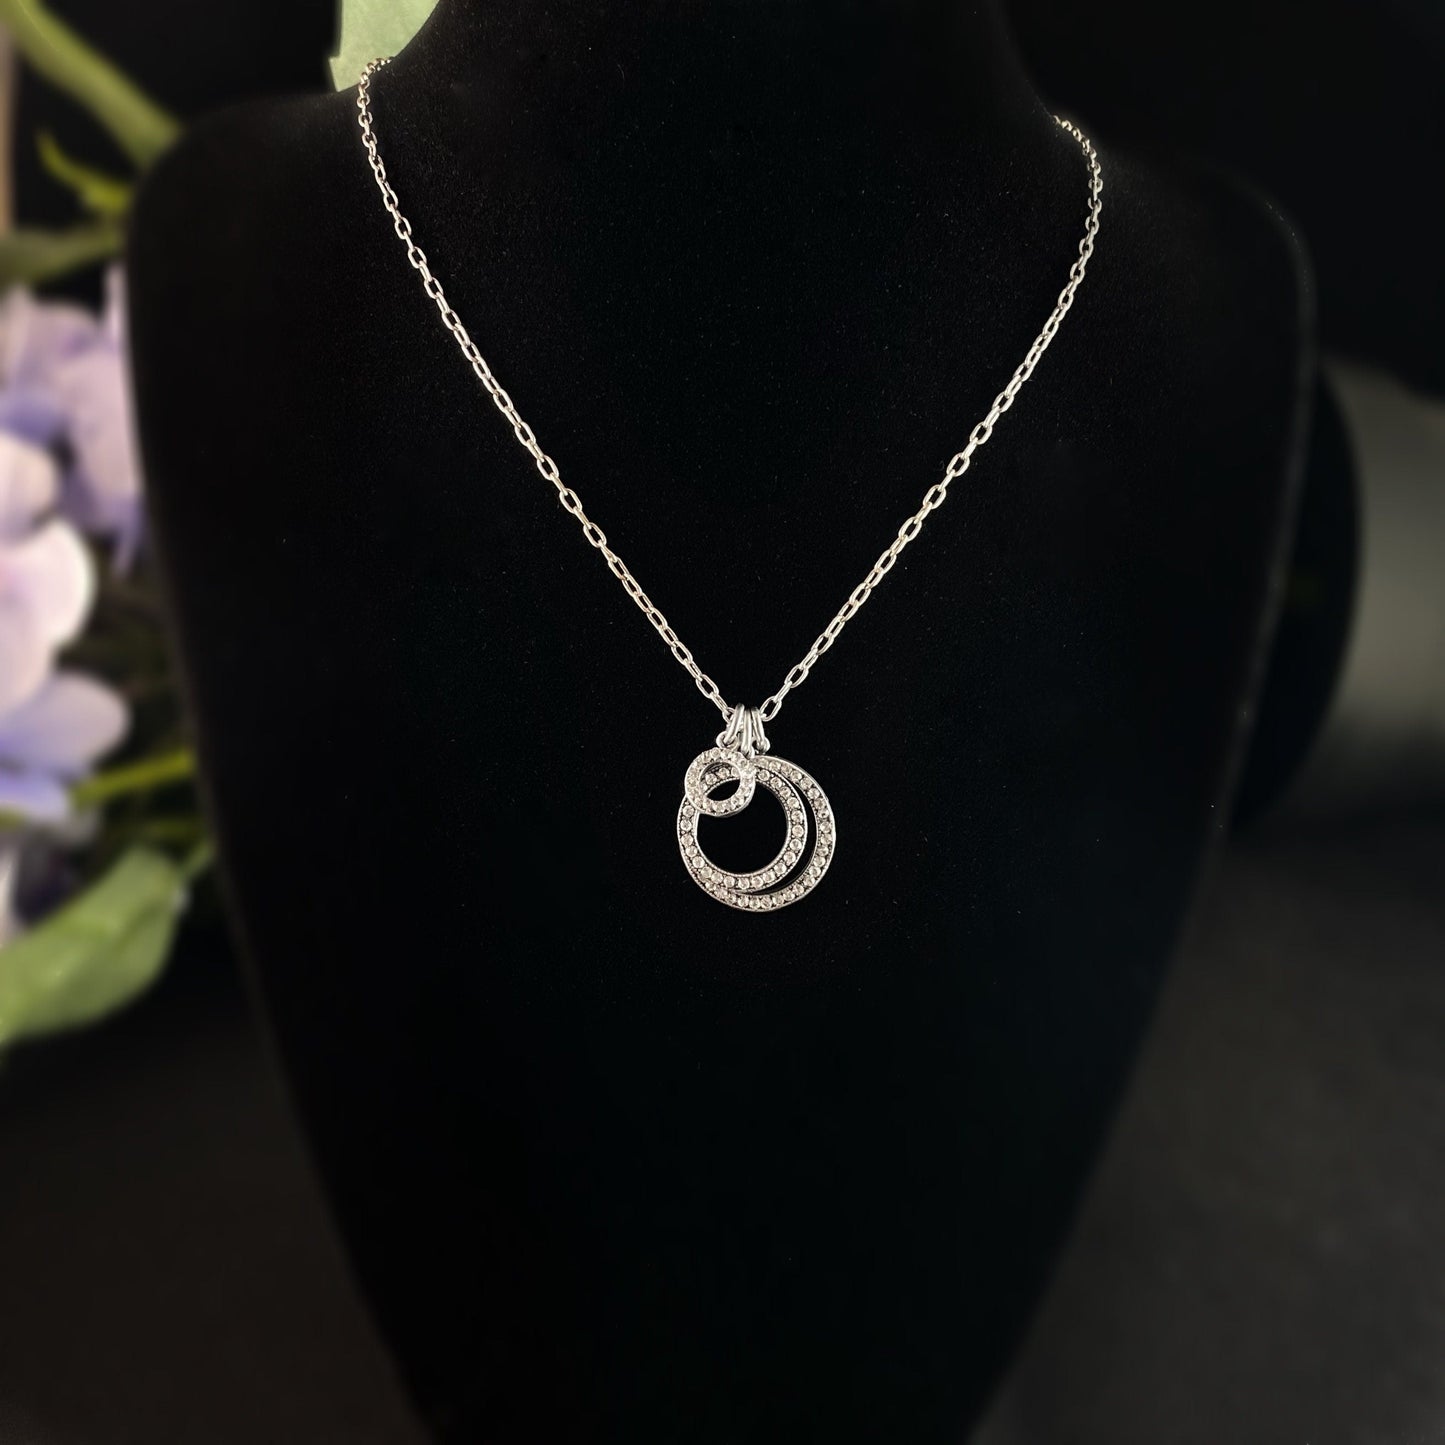 Silver Circle Swarovski Crystal Pendant Necklace - La Vie Parisienne by Catherine Popesco